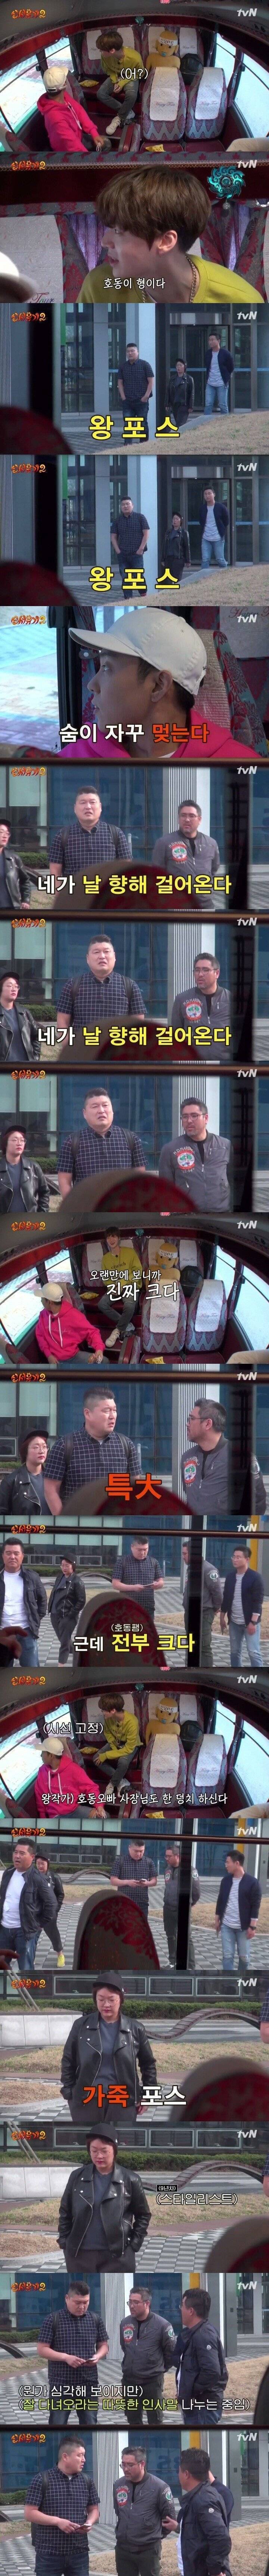 SM에서 가장 쌔다는 강호동 매니저팀.jpg | 인스티즈